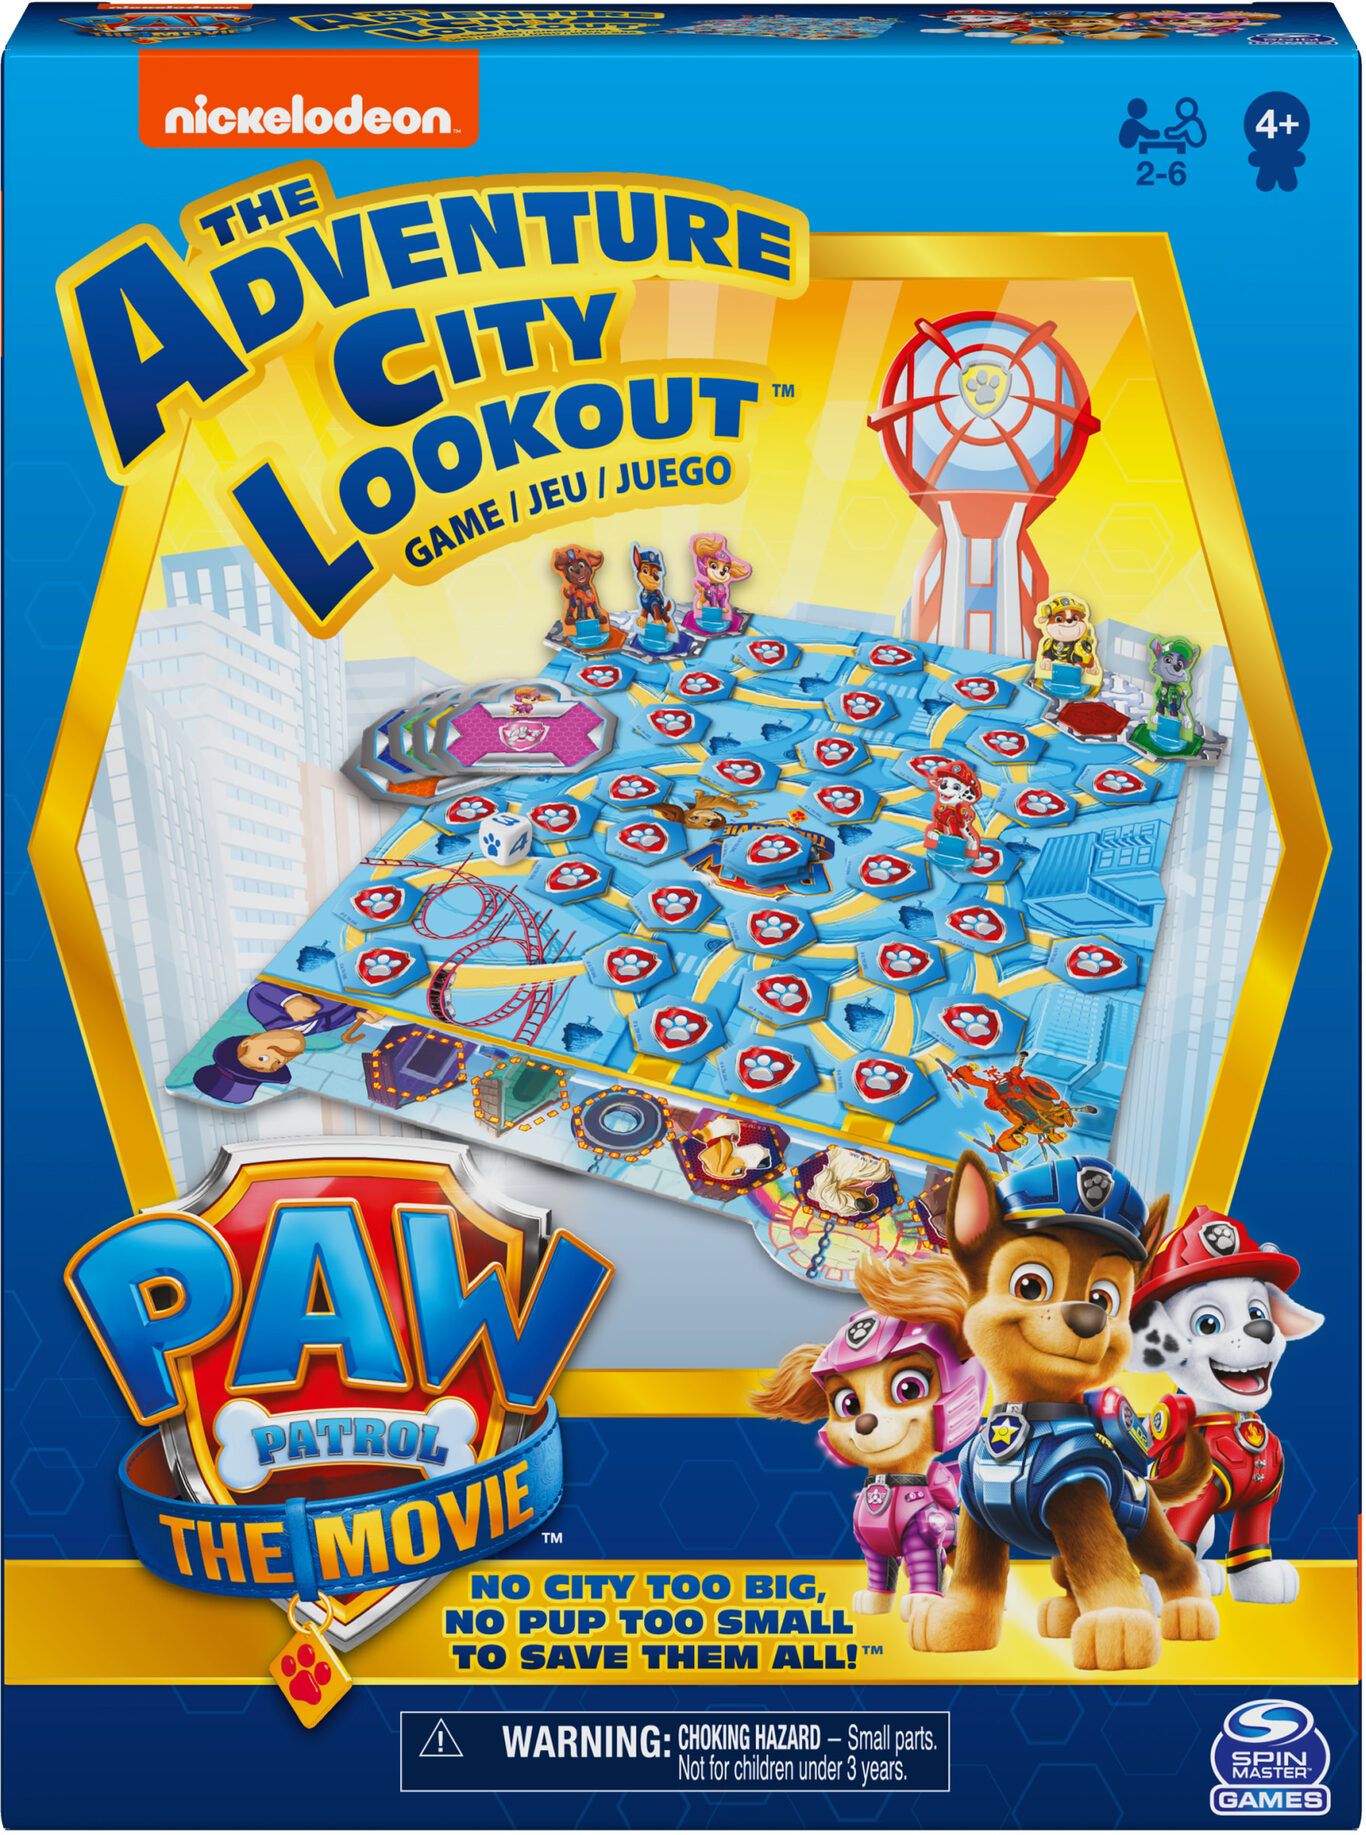 Paw patrol - The movie Spel "Save the City"